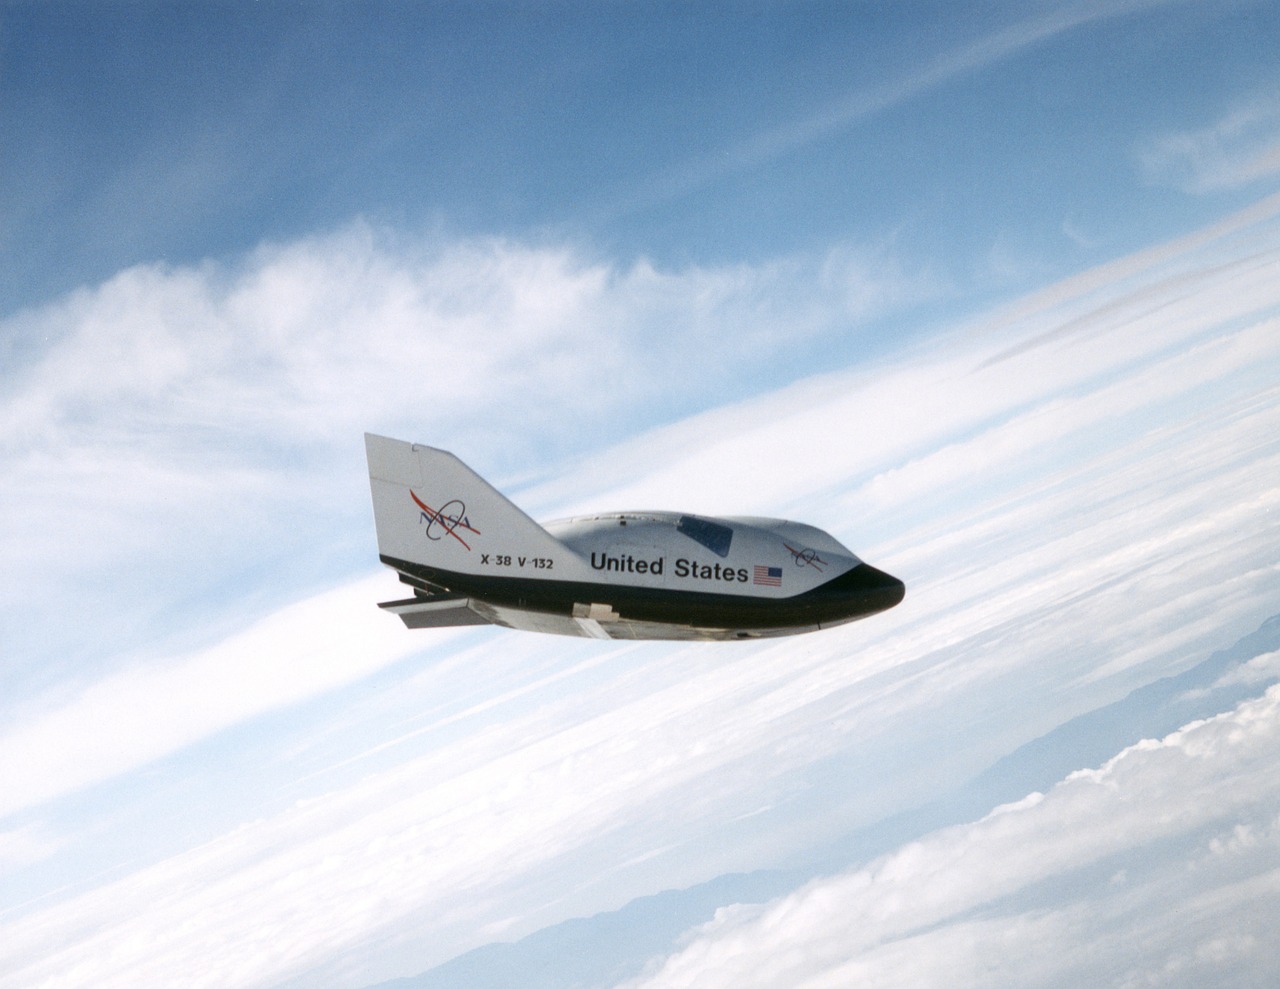 x-38 space vehicle flight free photo